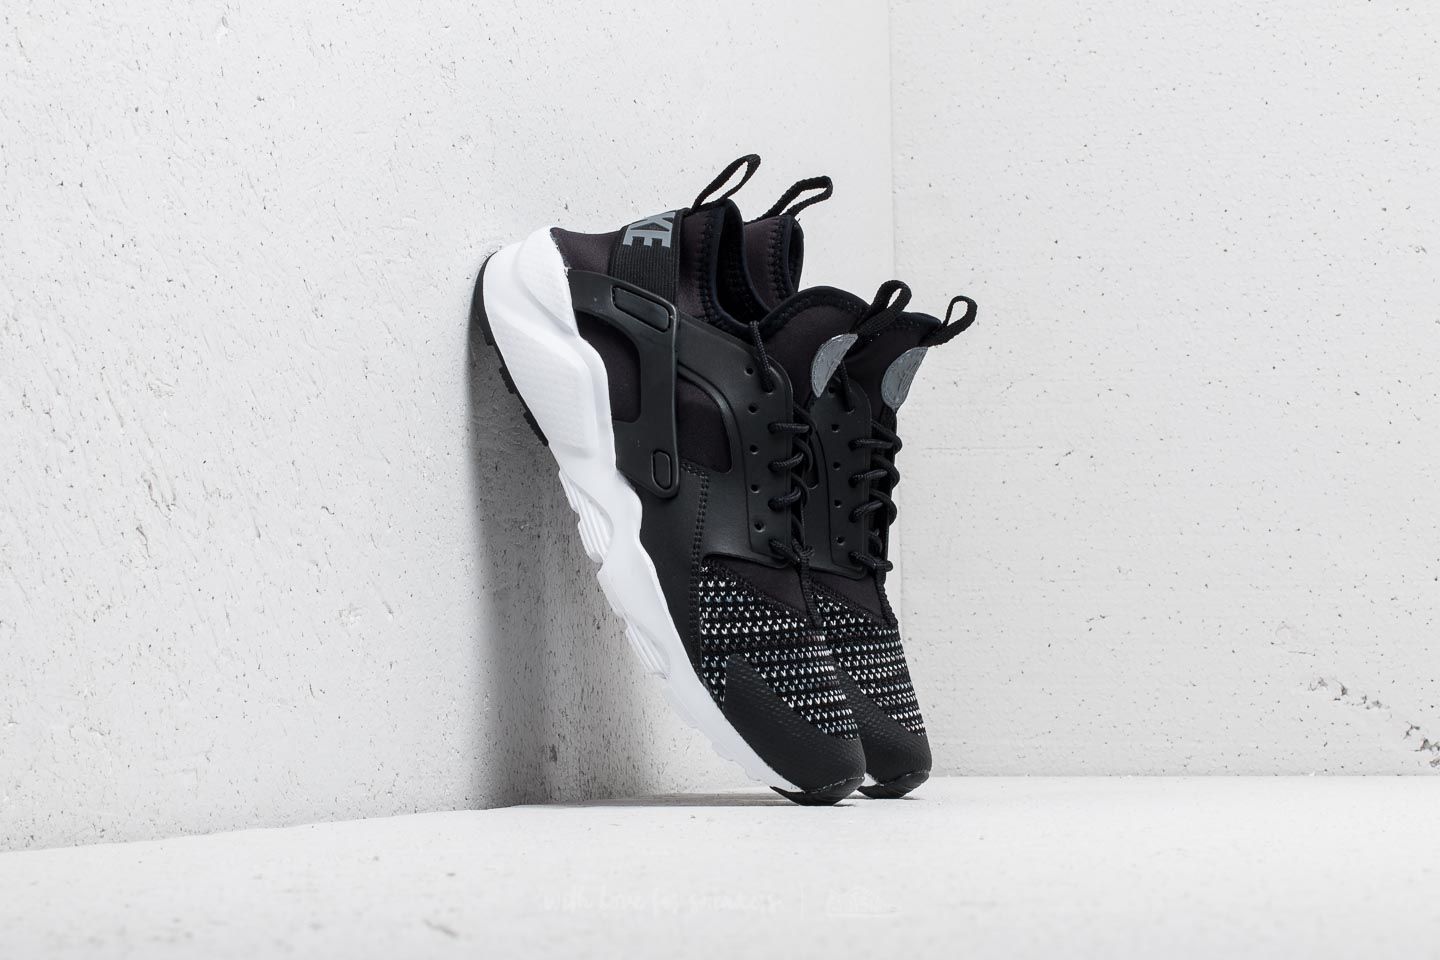 Chaussures et baskets femme Nike Air Huarache Run Ultra SE (GS) Black/ Cool Grey-Anthracite